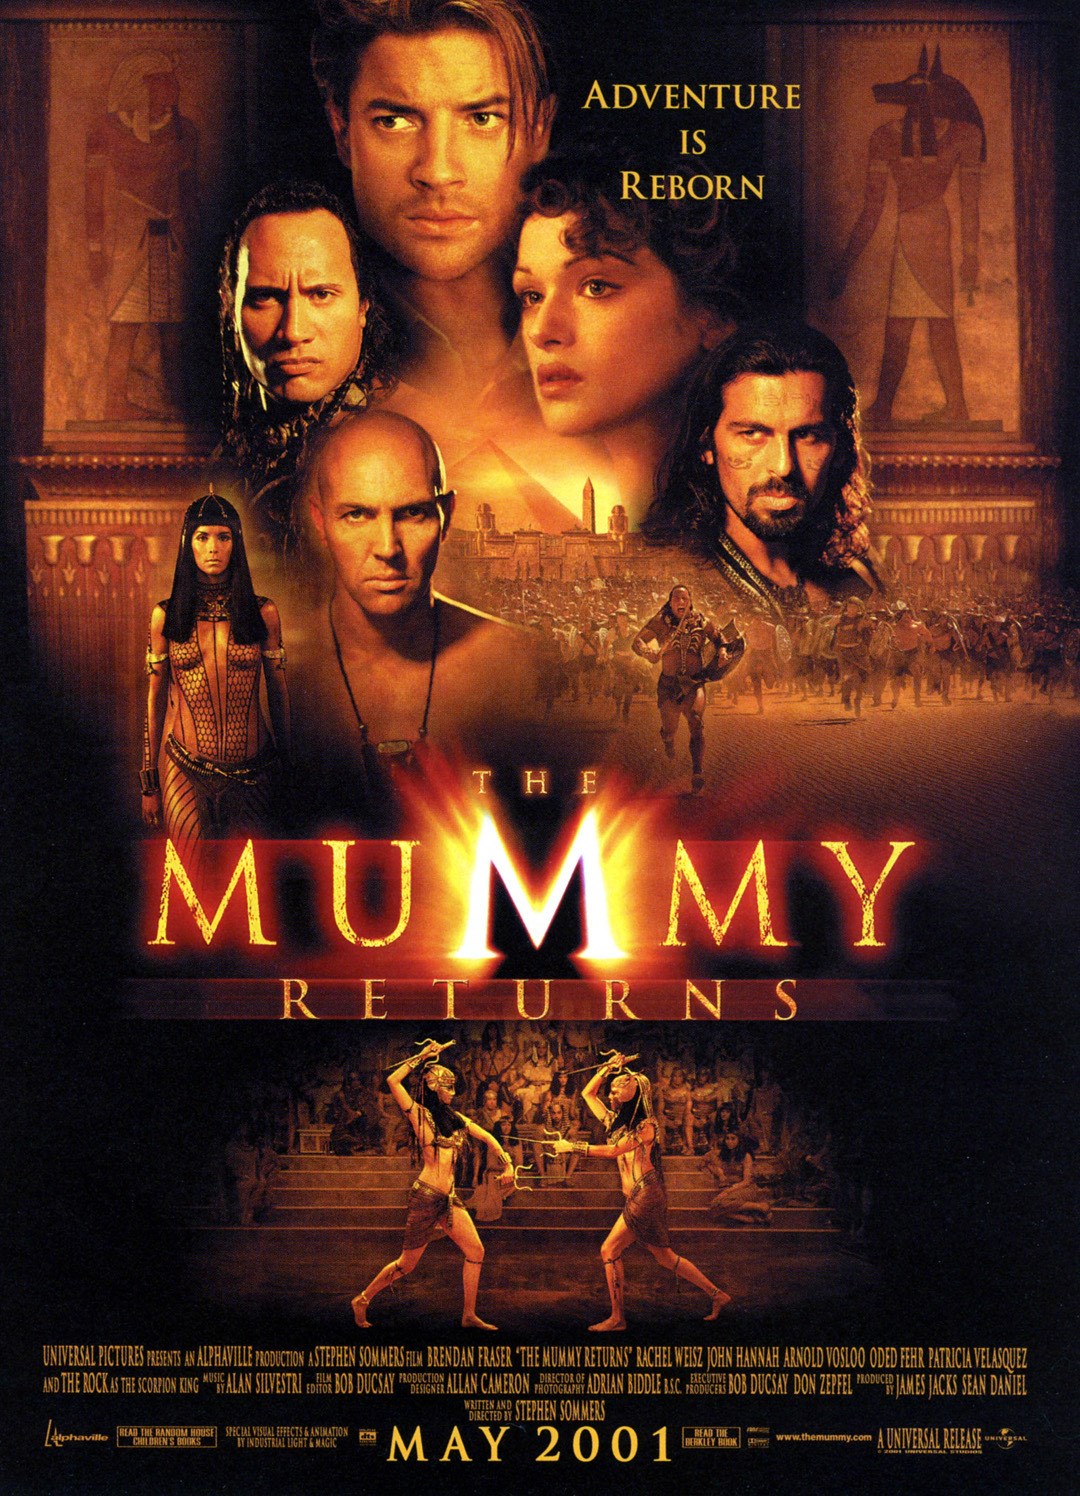 The mummy returns - 2001